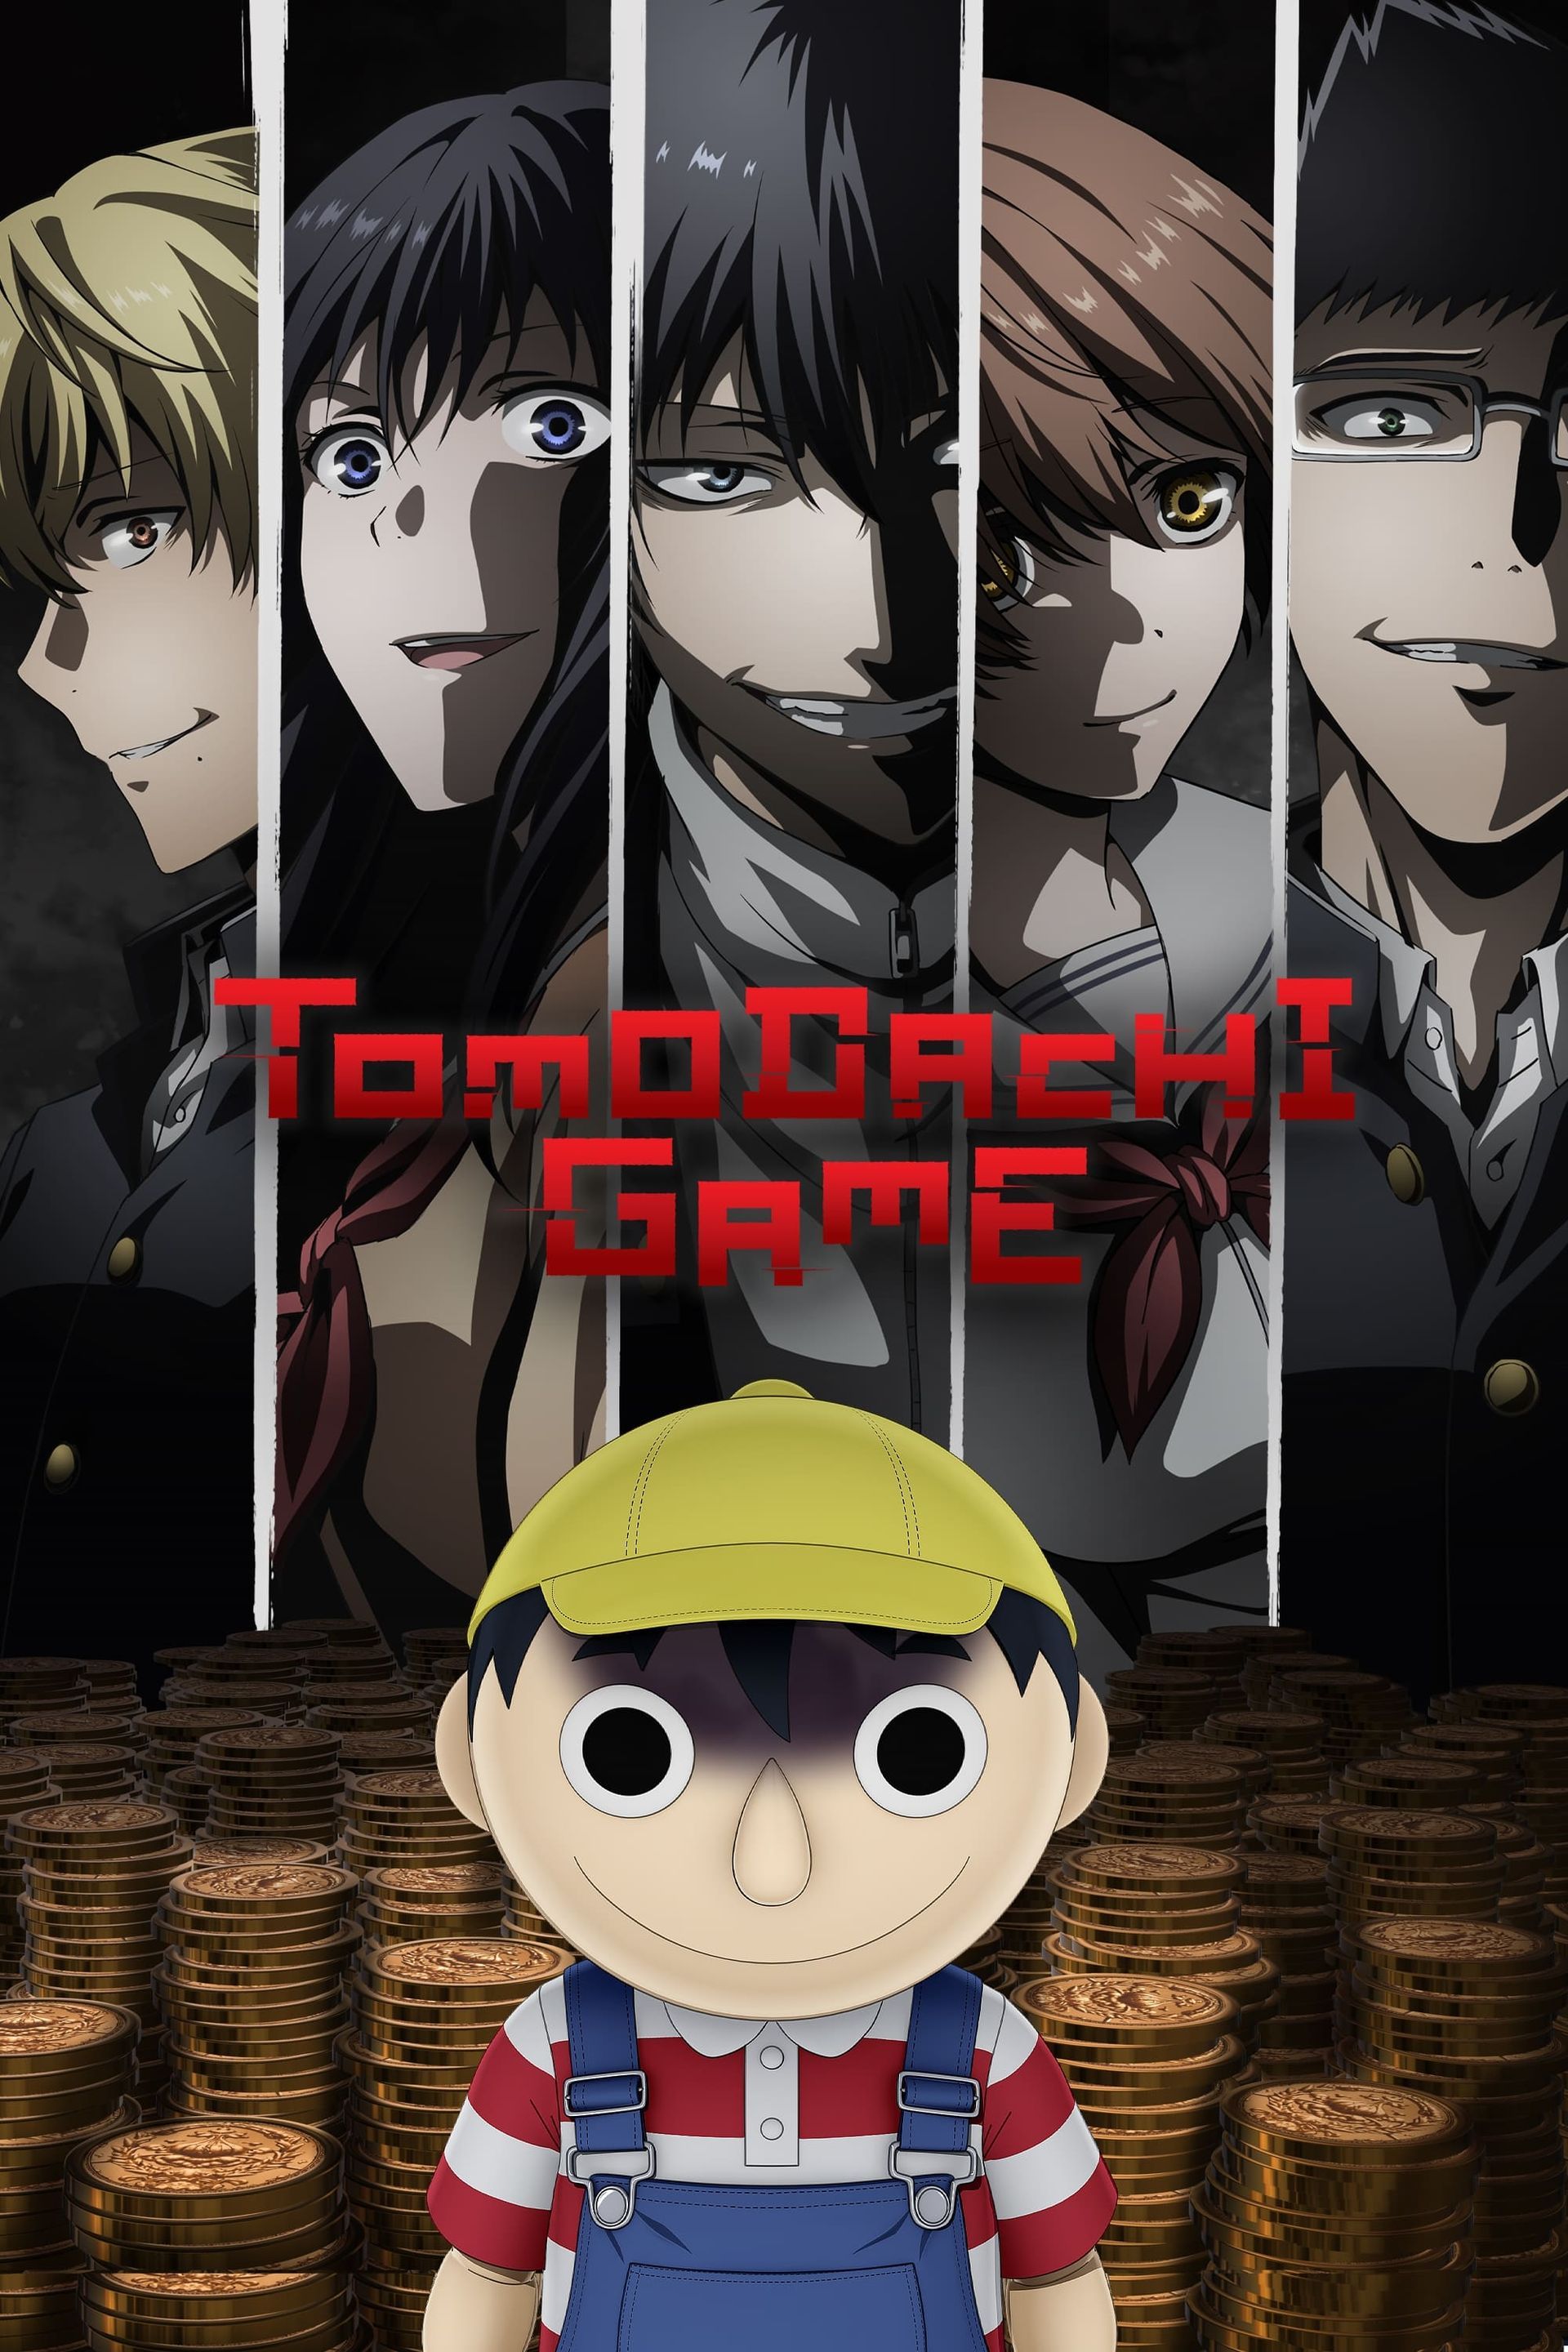 Watch Tomodachi Game season 1 episode 12 streaming online